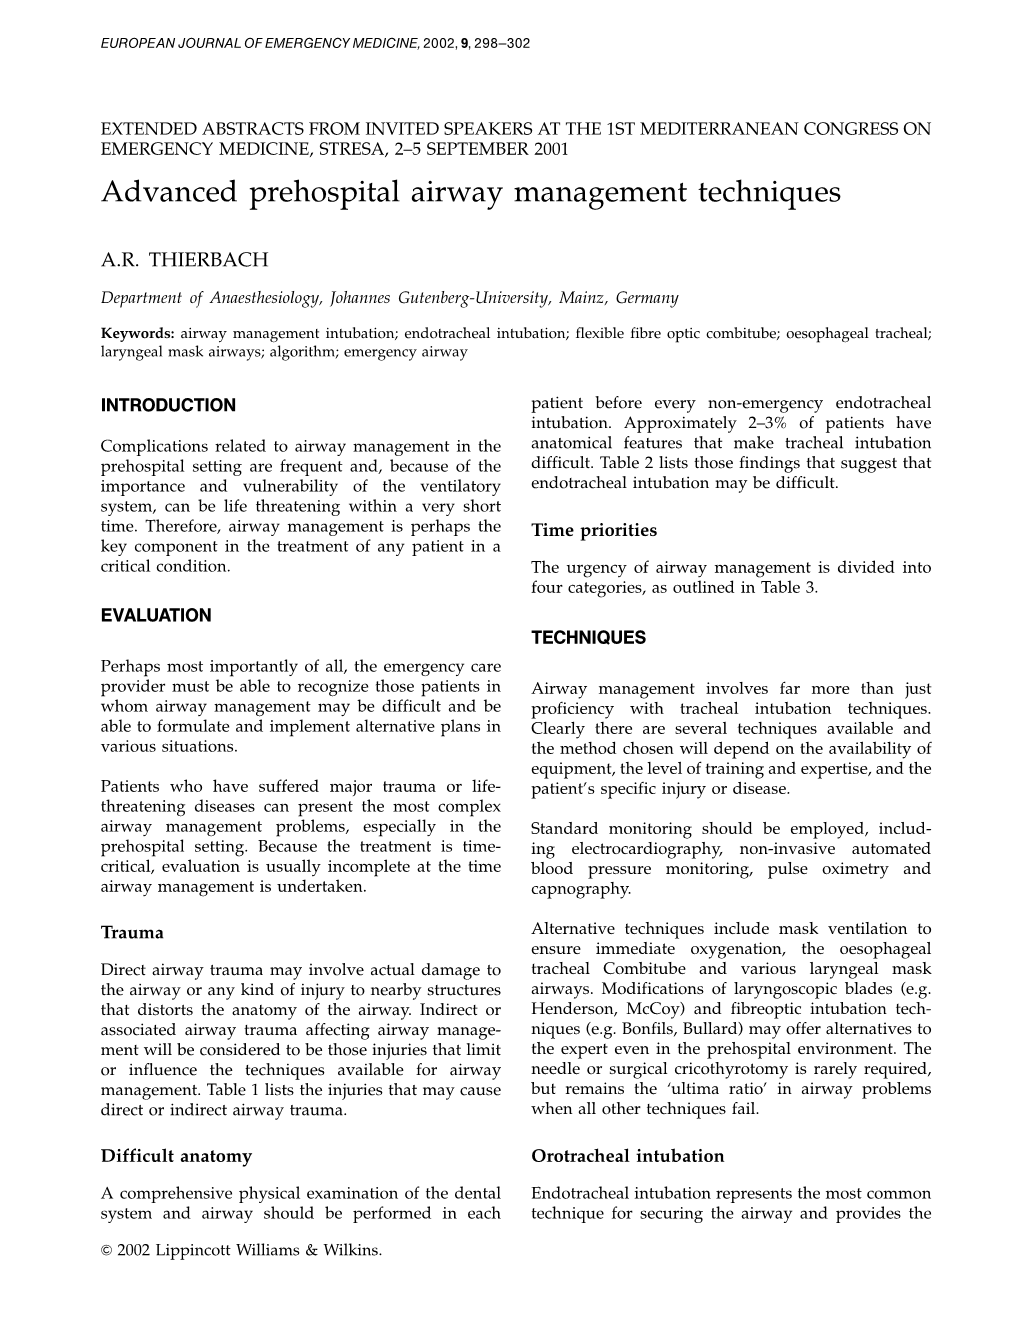 Advanced Prehospital Airway Management Techniques